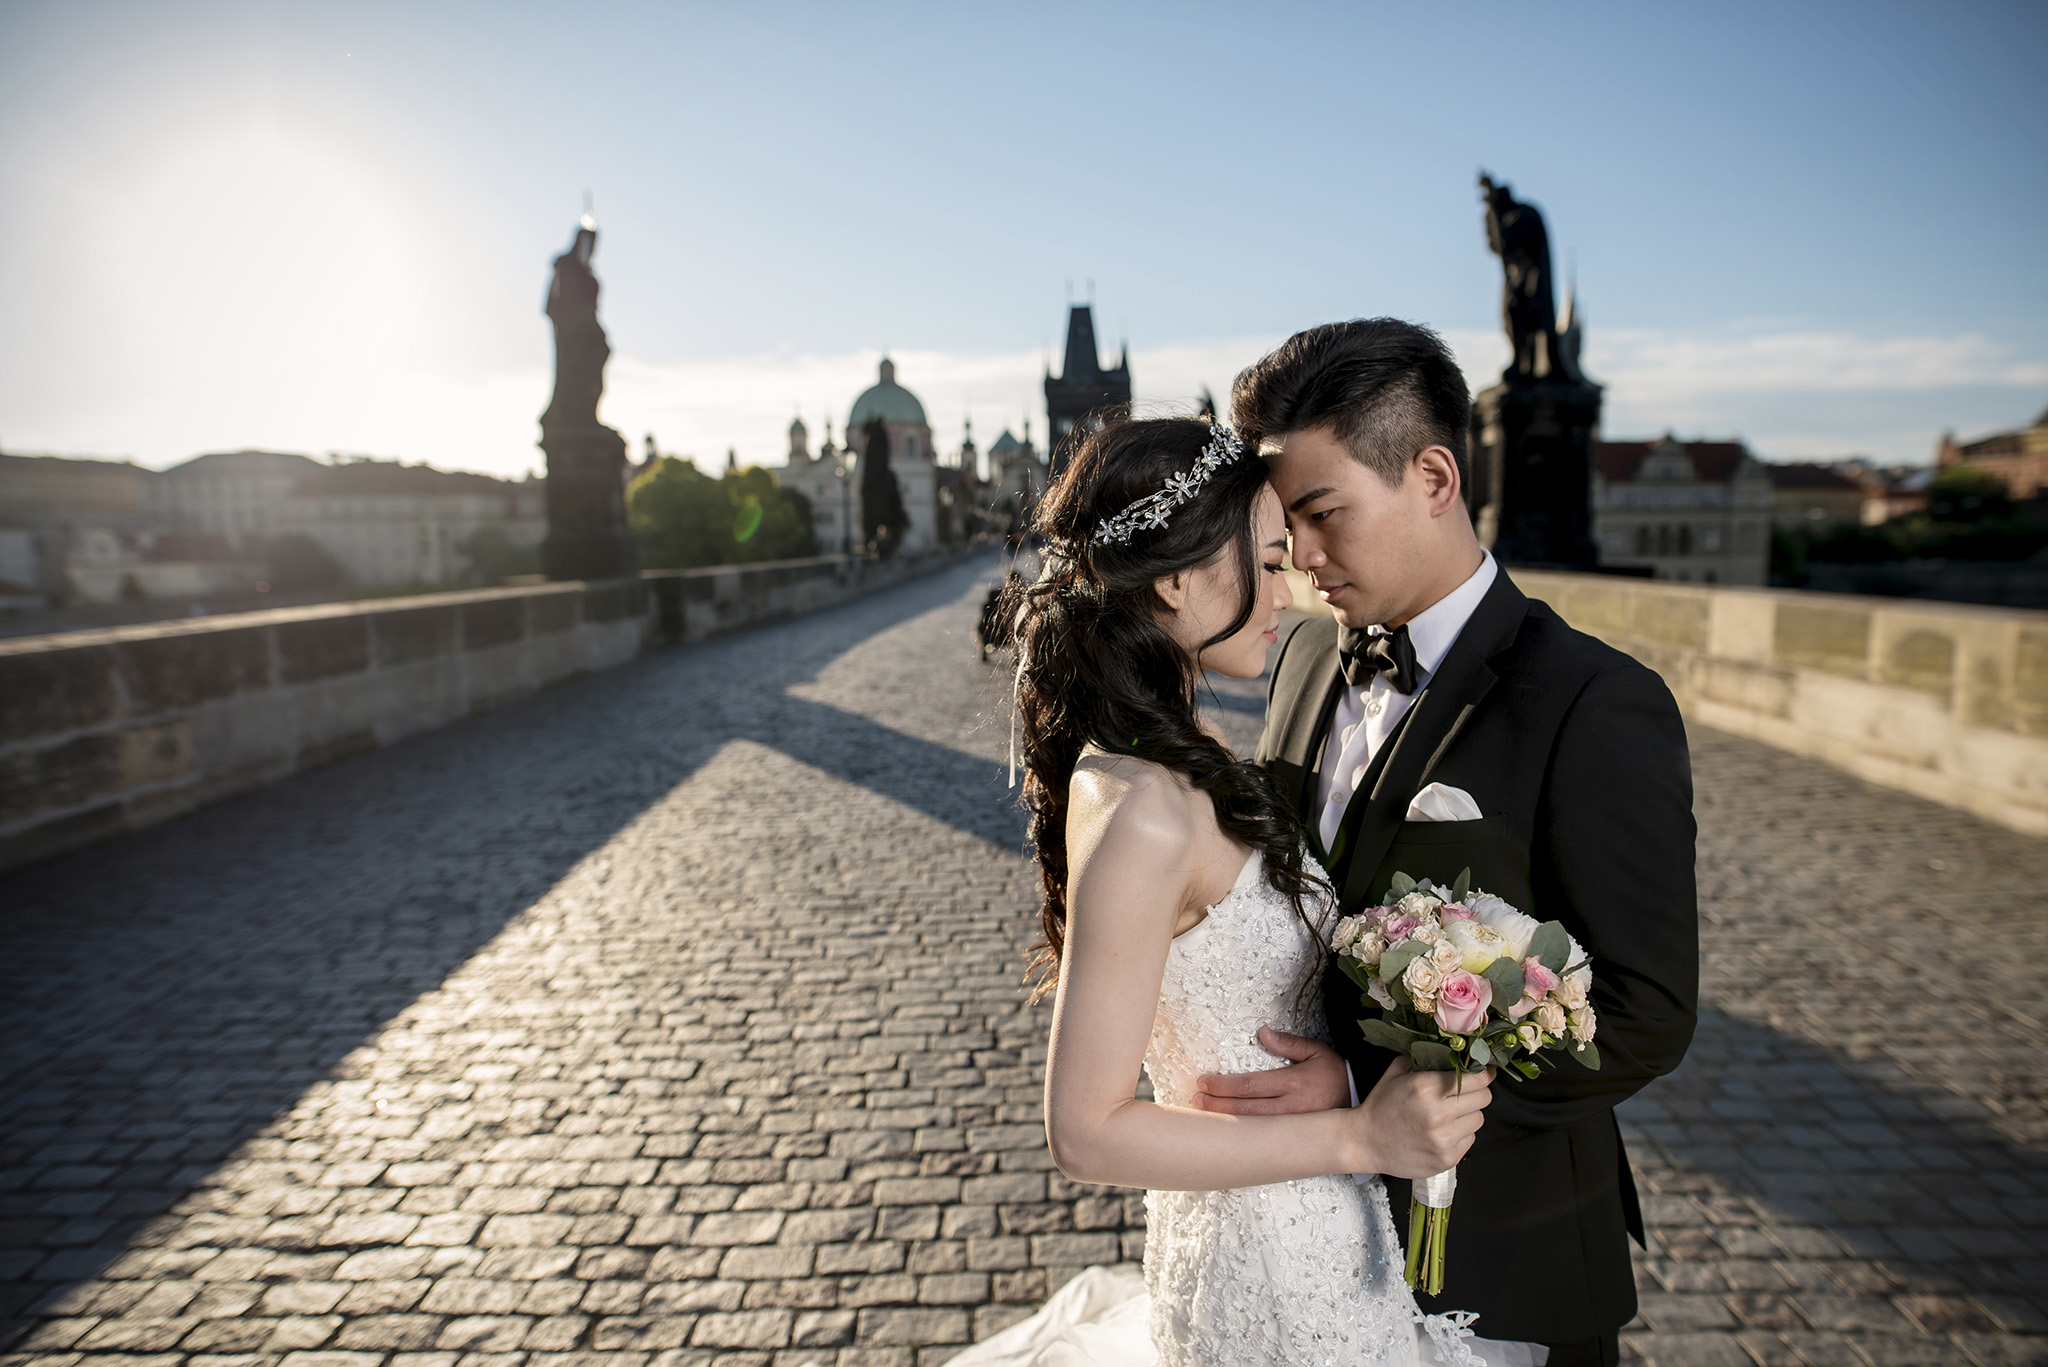 21 Unique Pre-Wedding Shoot Ideas For. best lens for pre wedding photograph...